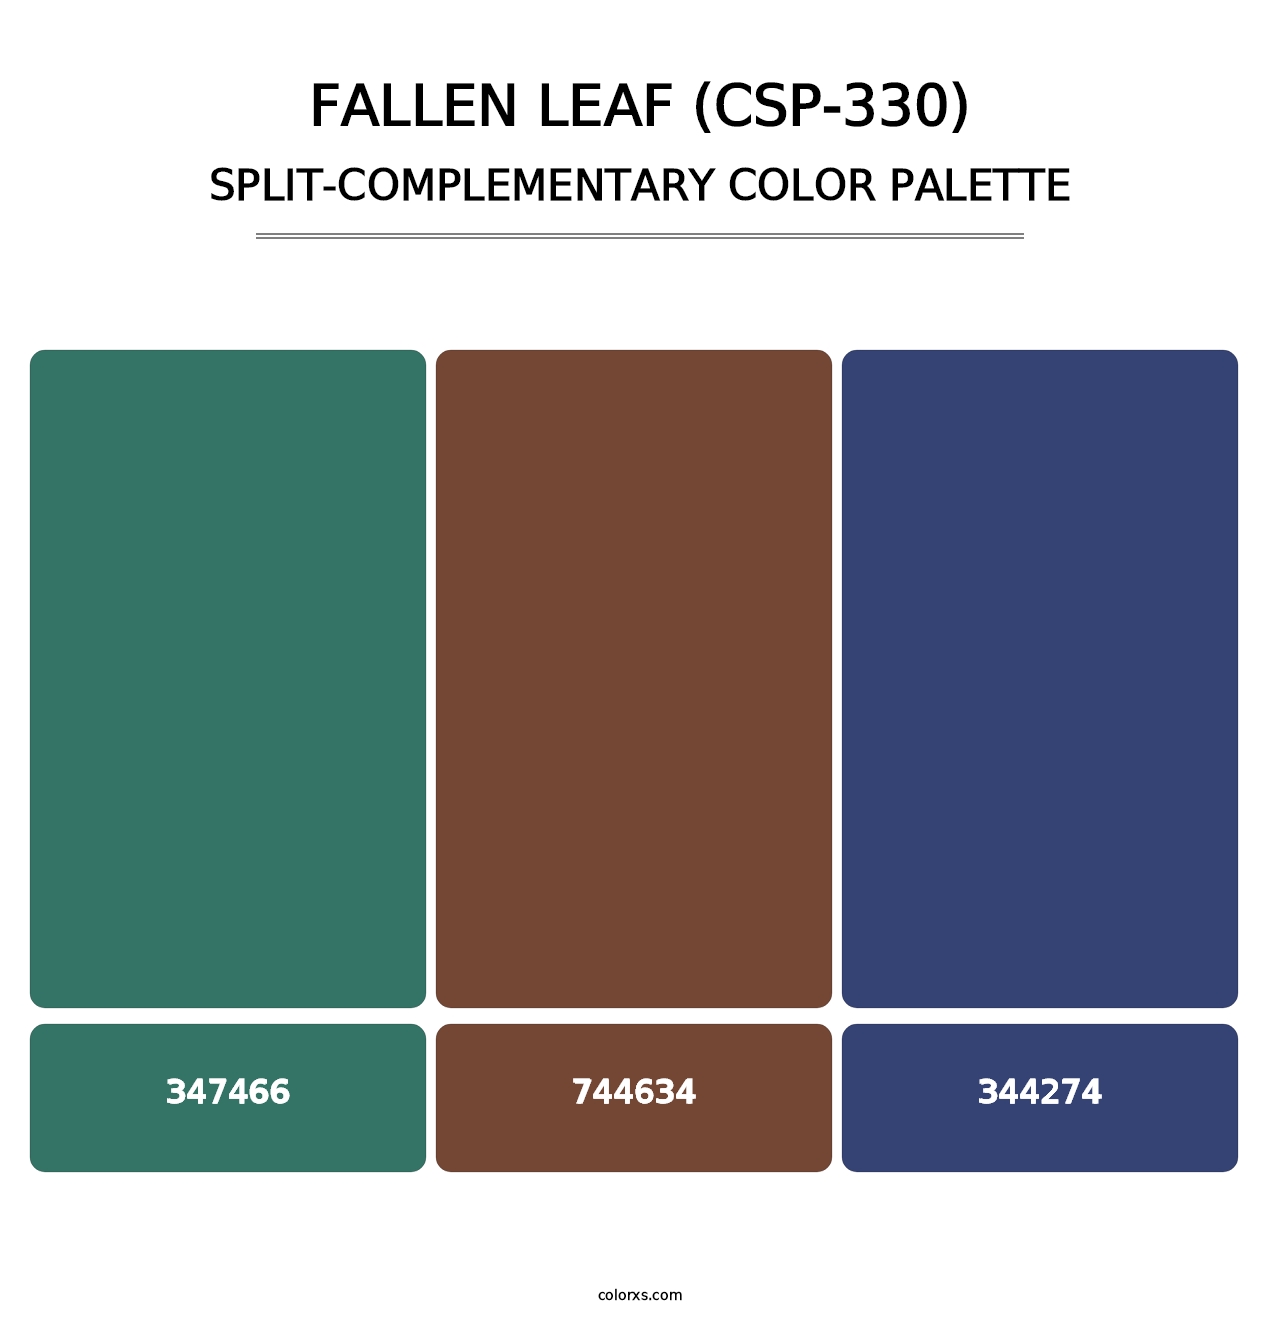 Fallen Leaf (CSP-330) - Split-Complementary Color Palette